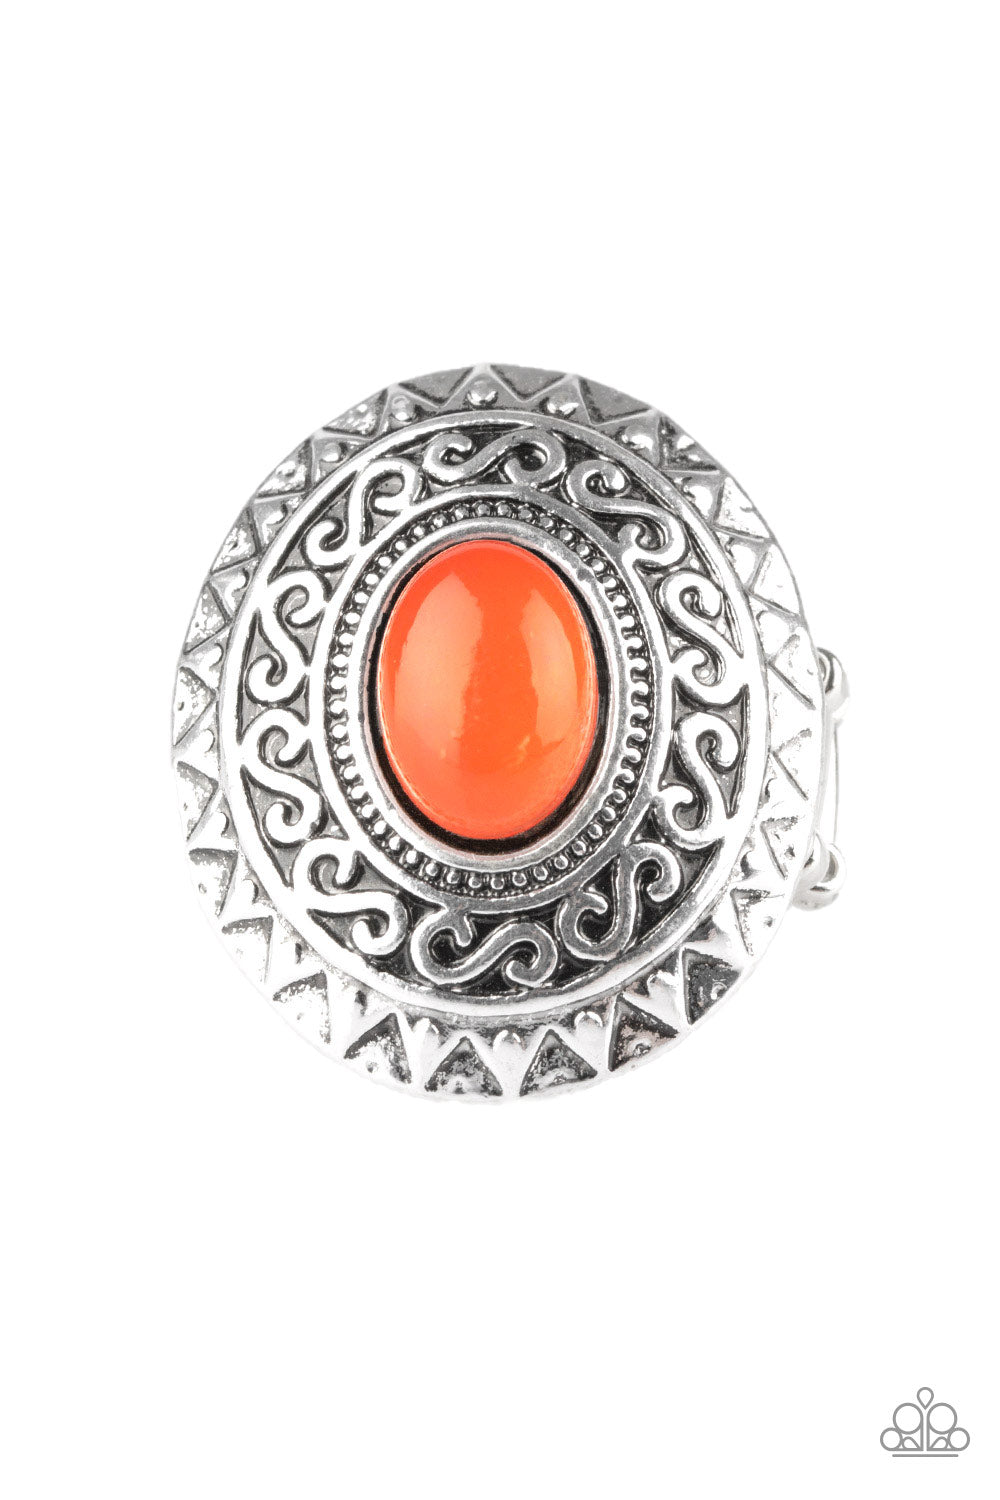 Hello Sunshine - Paparazzi Orange Ring - Be Adored Jewelry